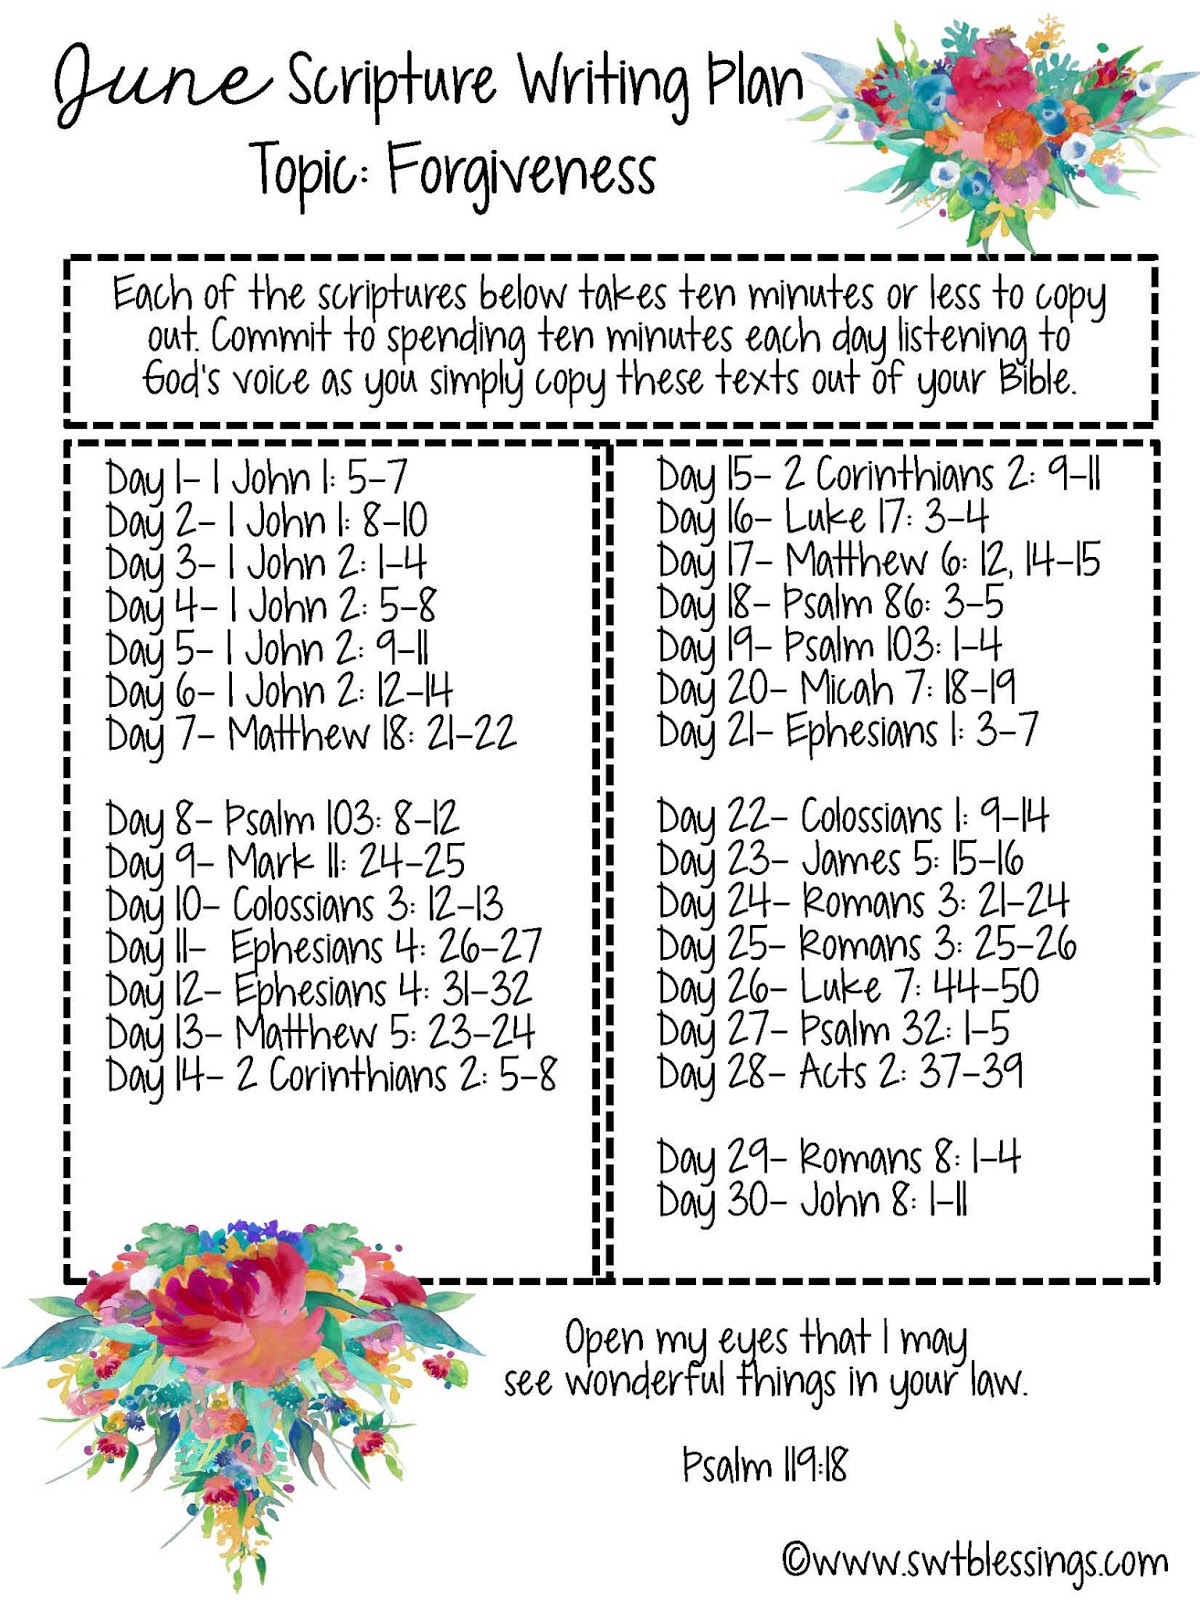 Sweet Blessings June Scripture Writing Plan 2016